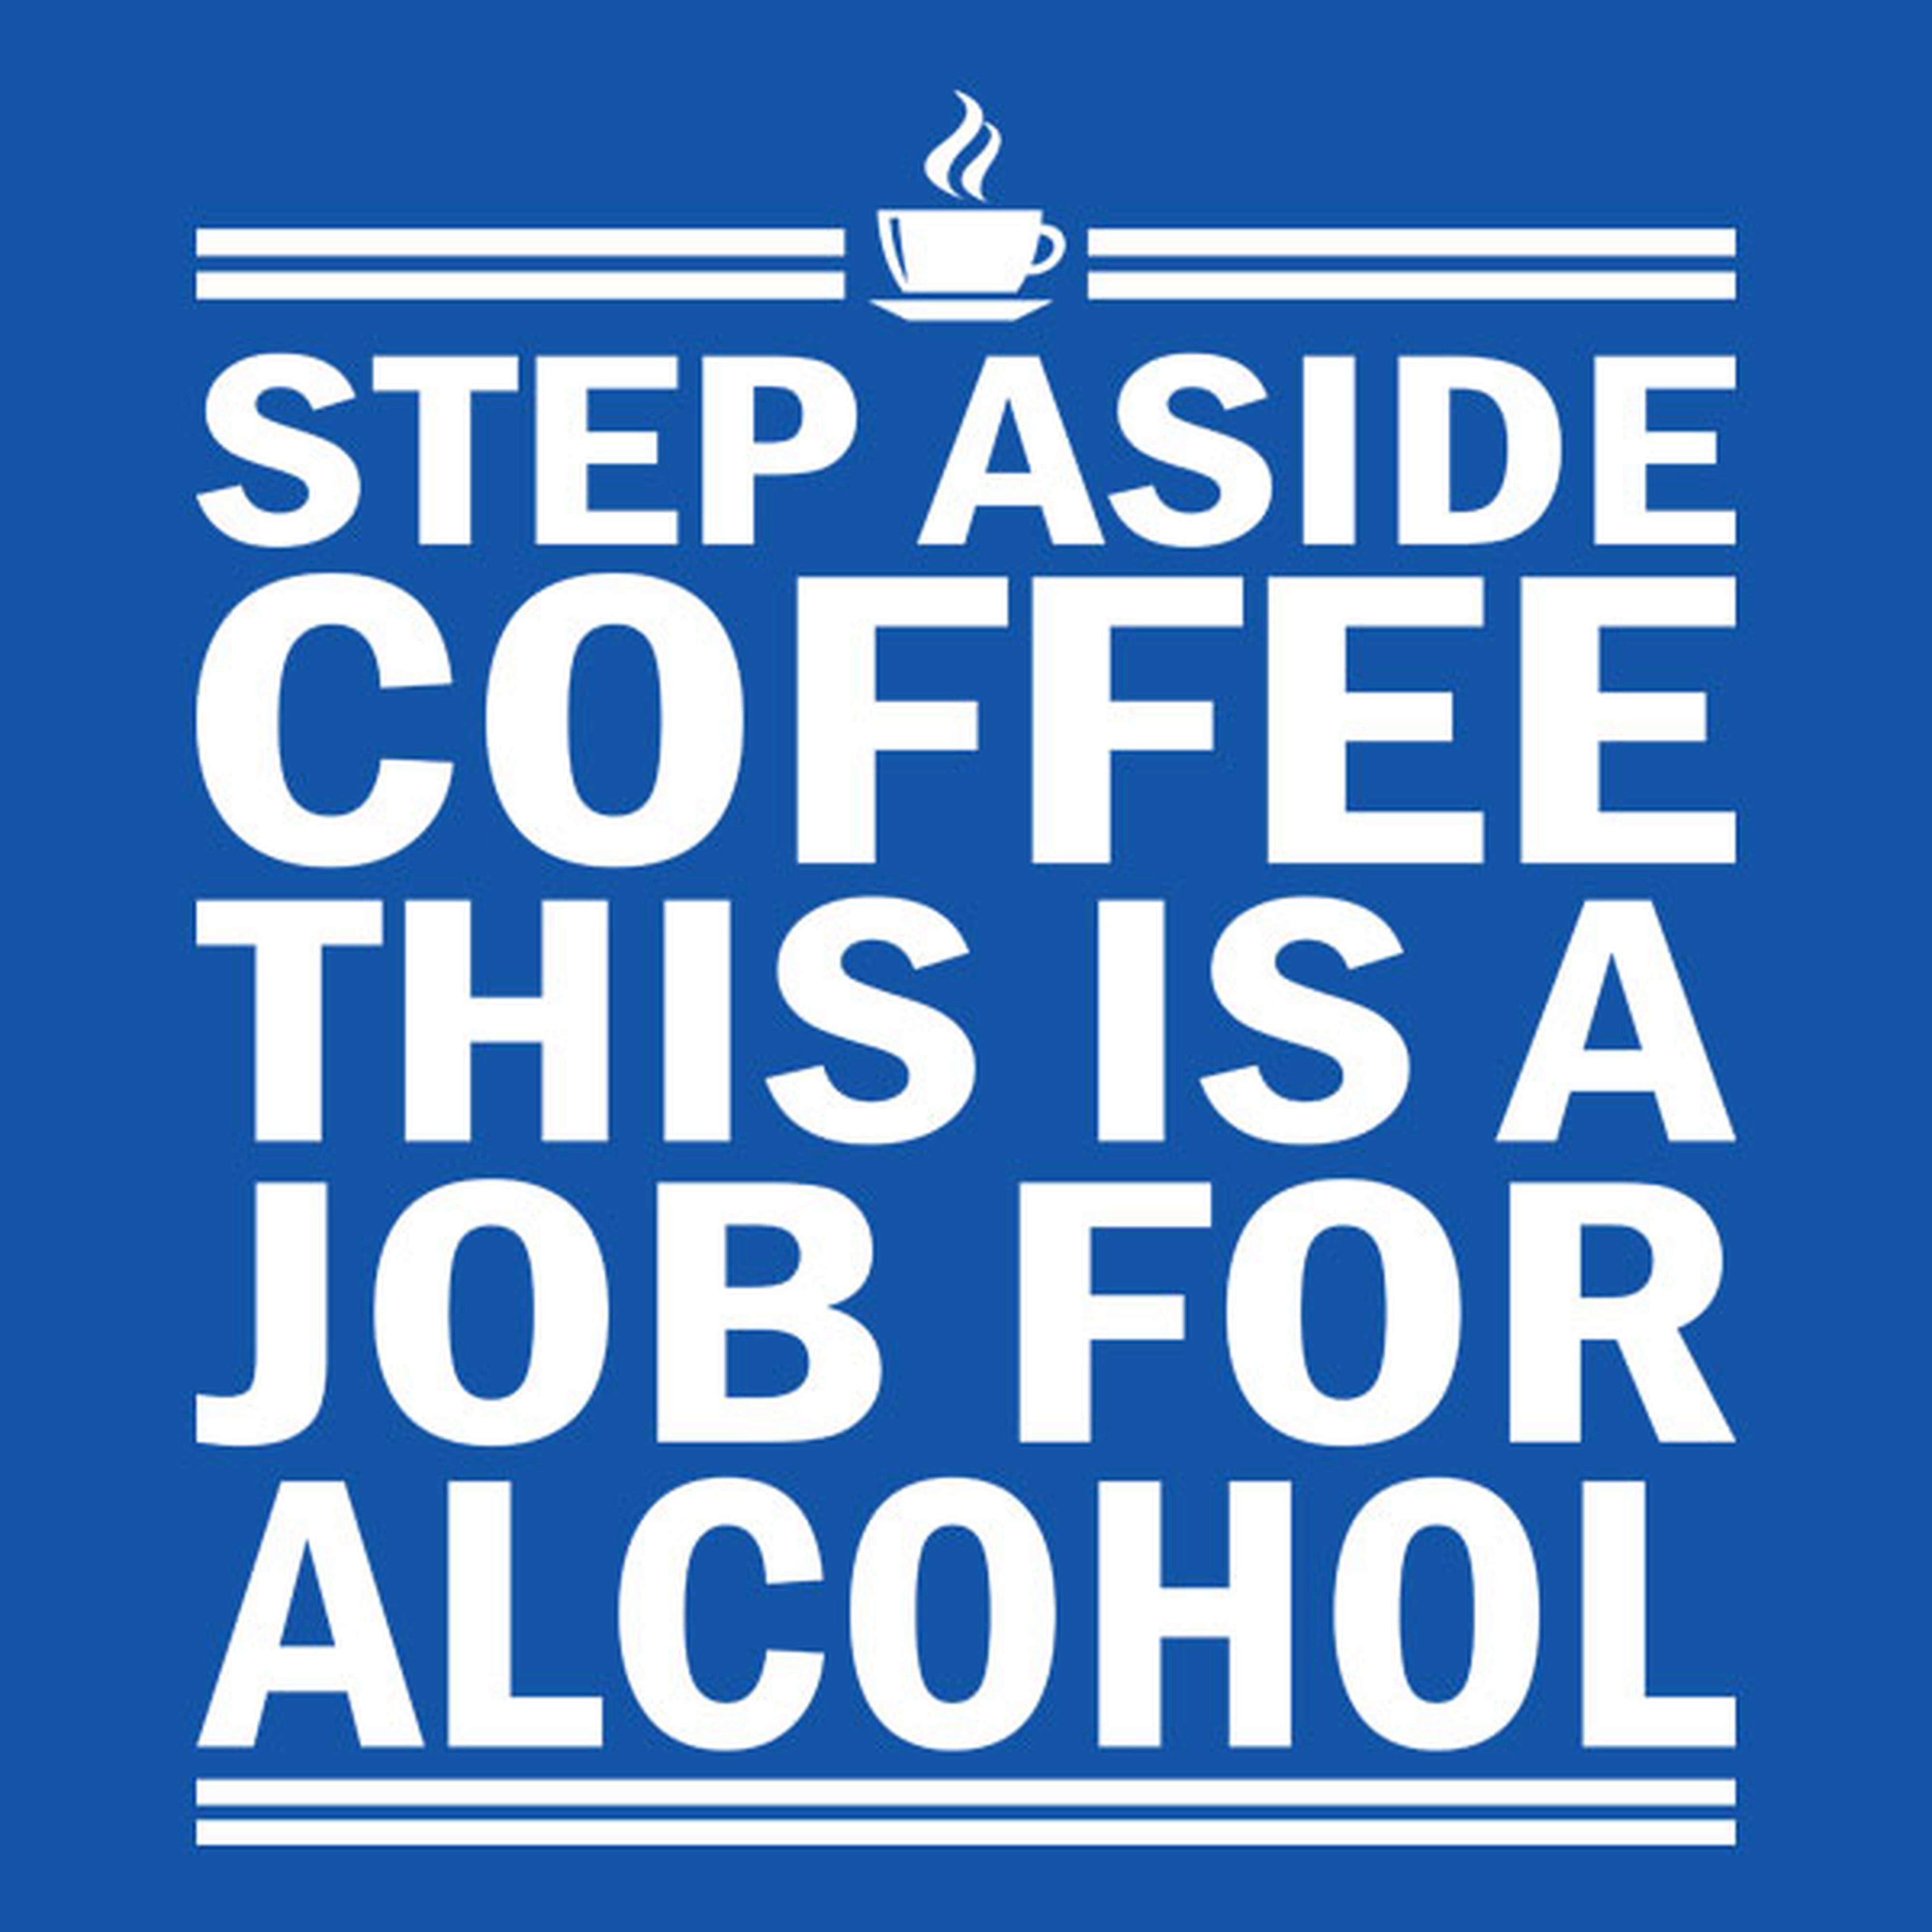 Step aside coffee